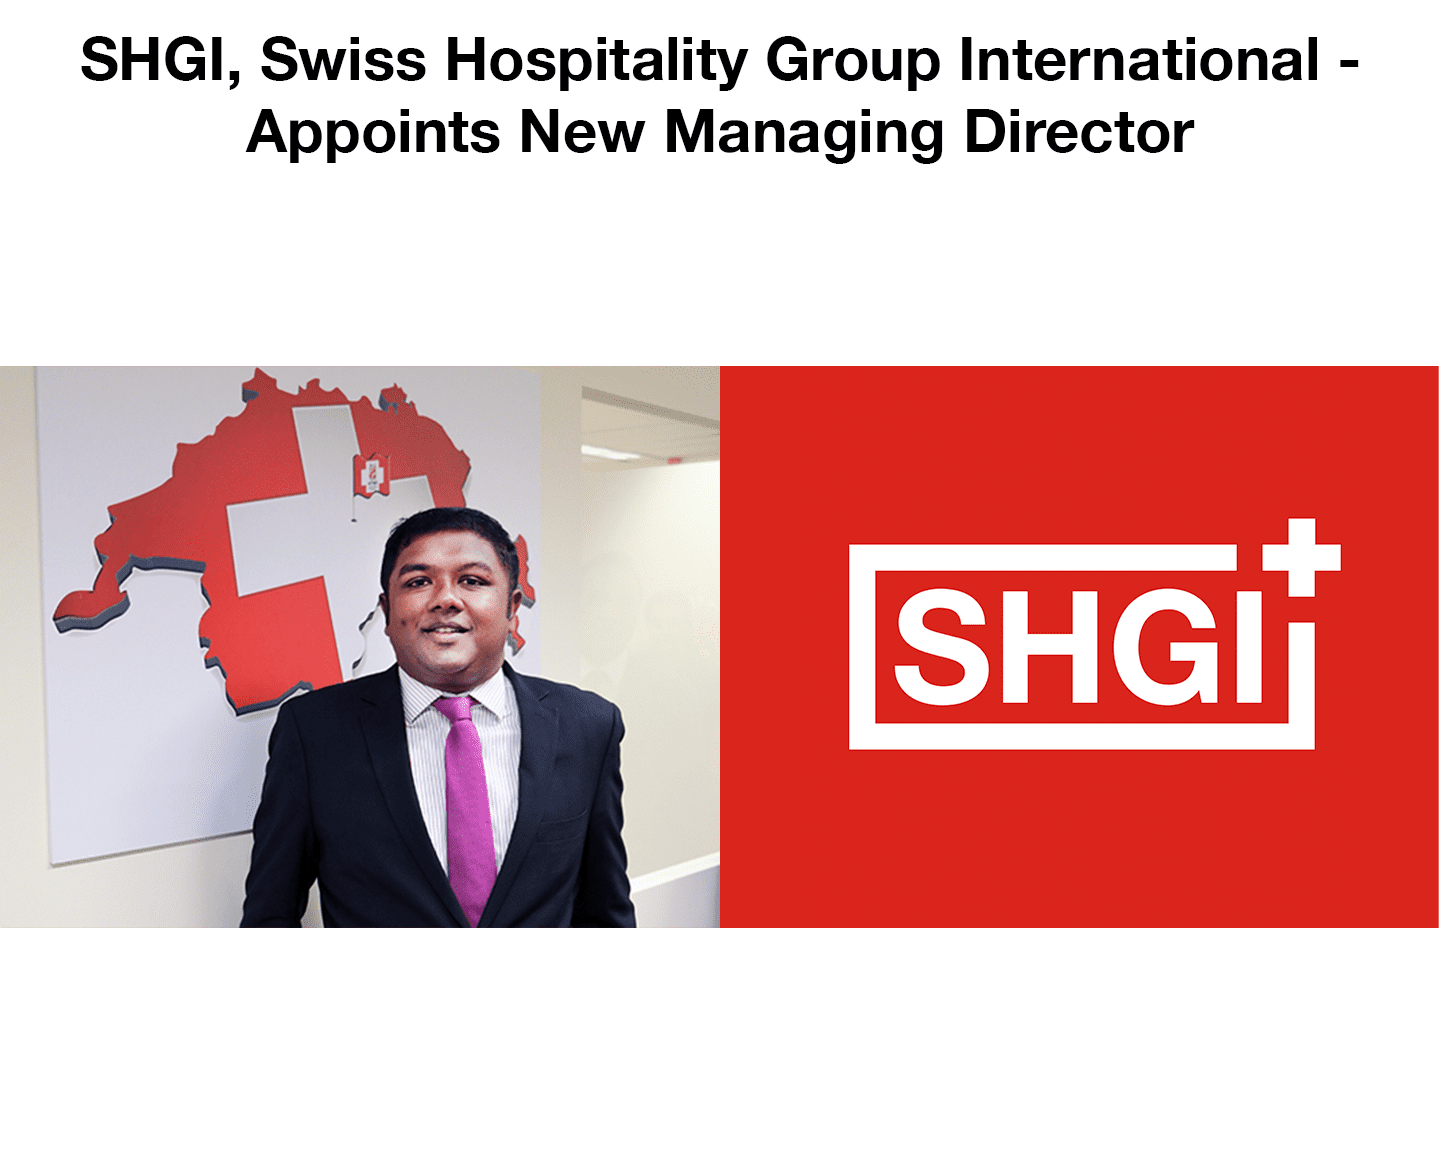 SHGI, Swiss Hospitality Group International - Managing Director